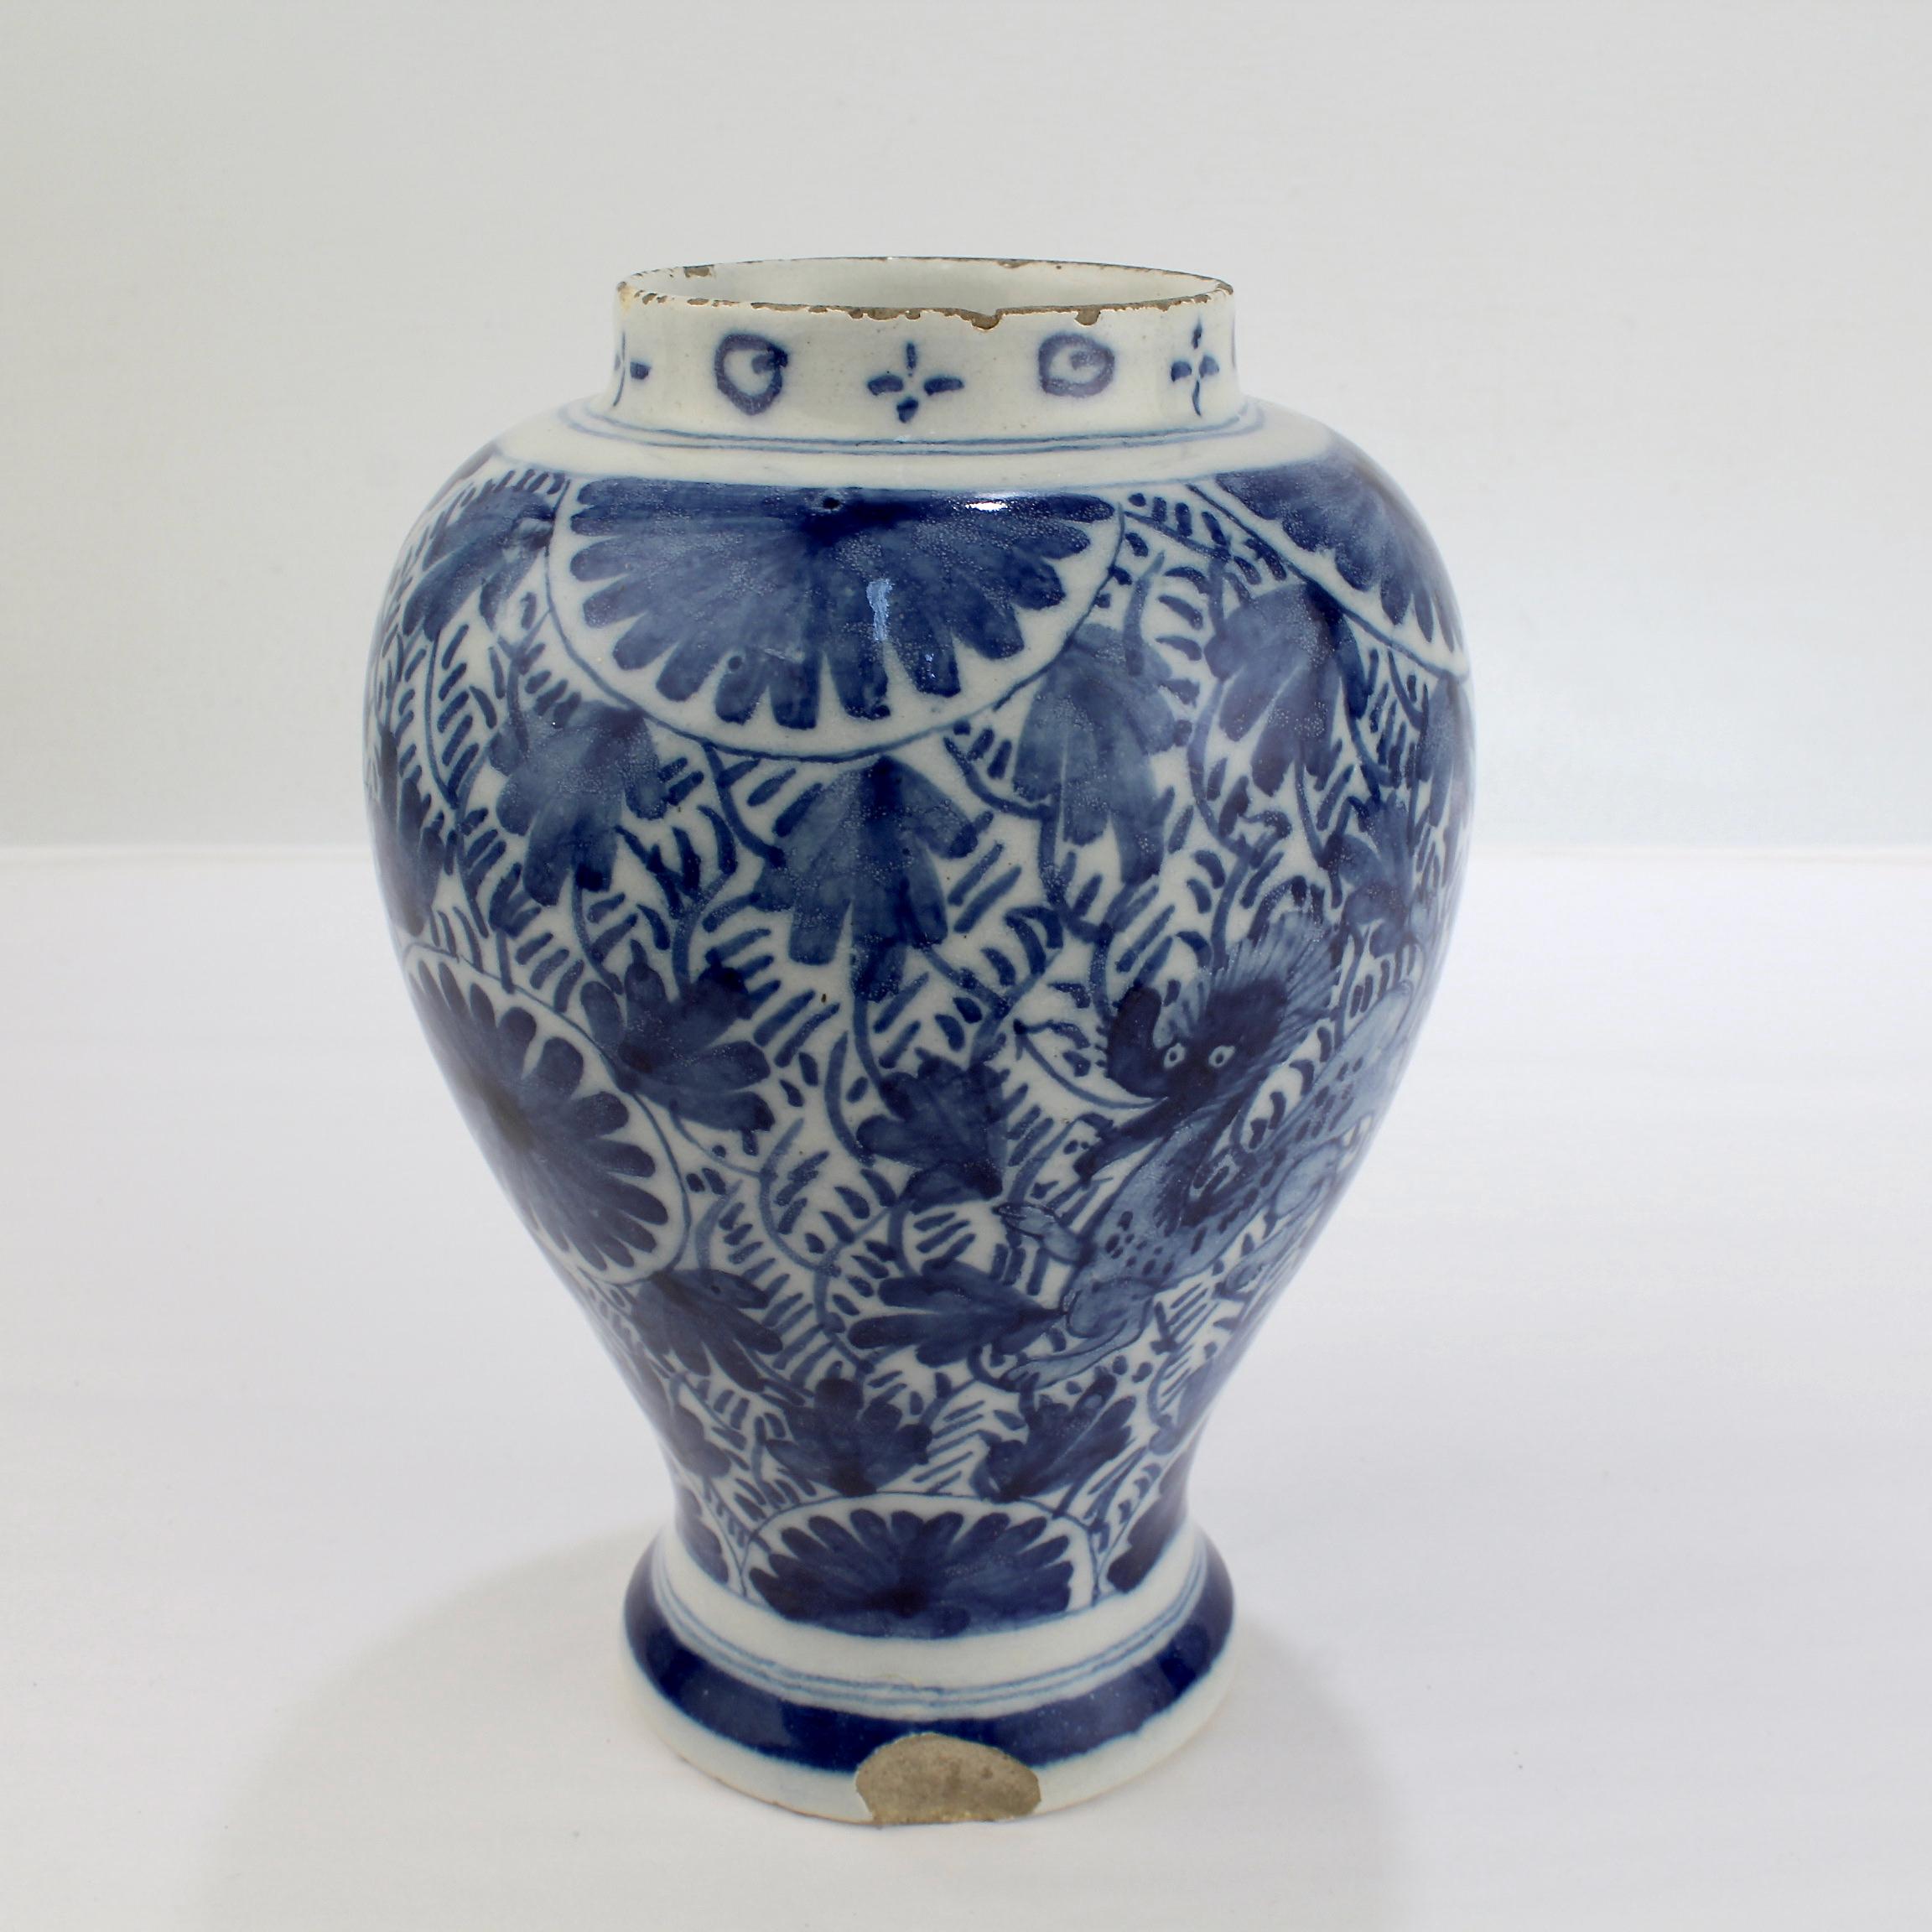 Baroque Antique 18th Century Dutch Delft Pottery Jar or Vessel